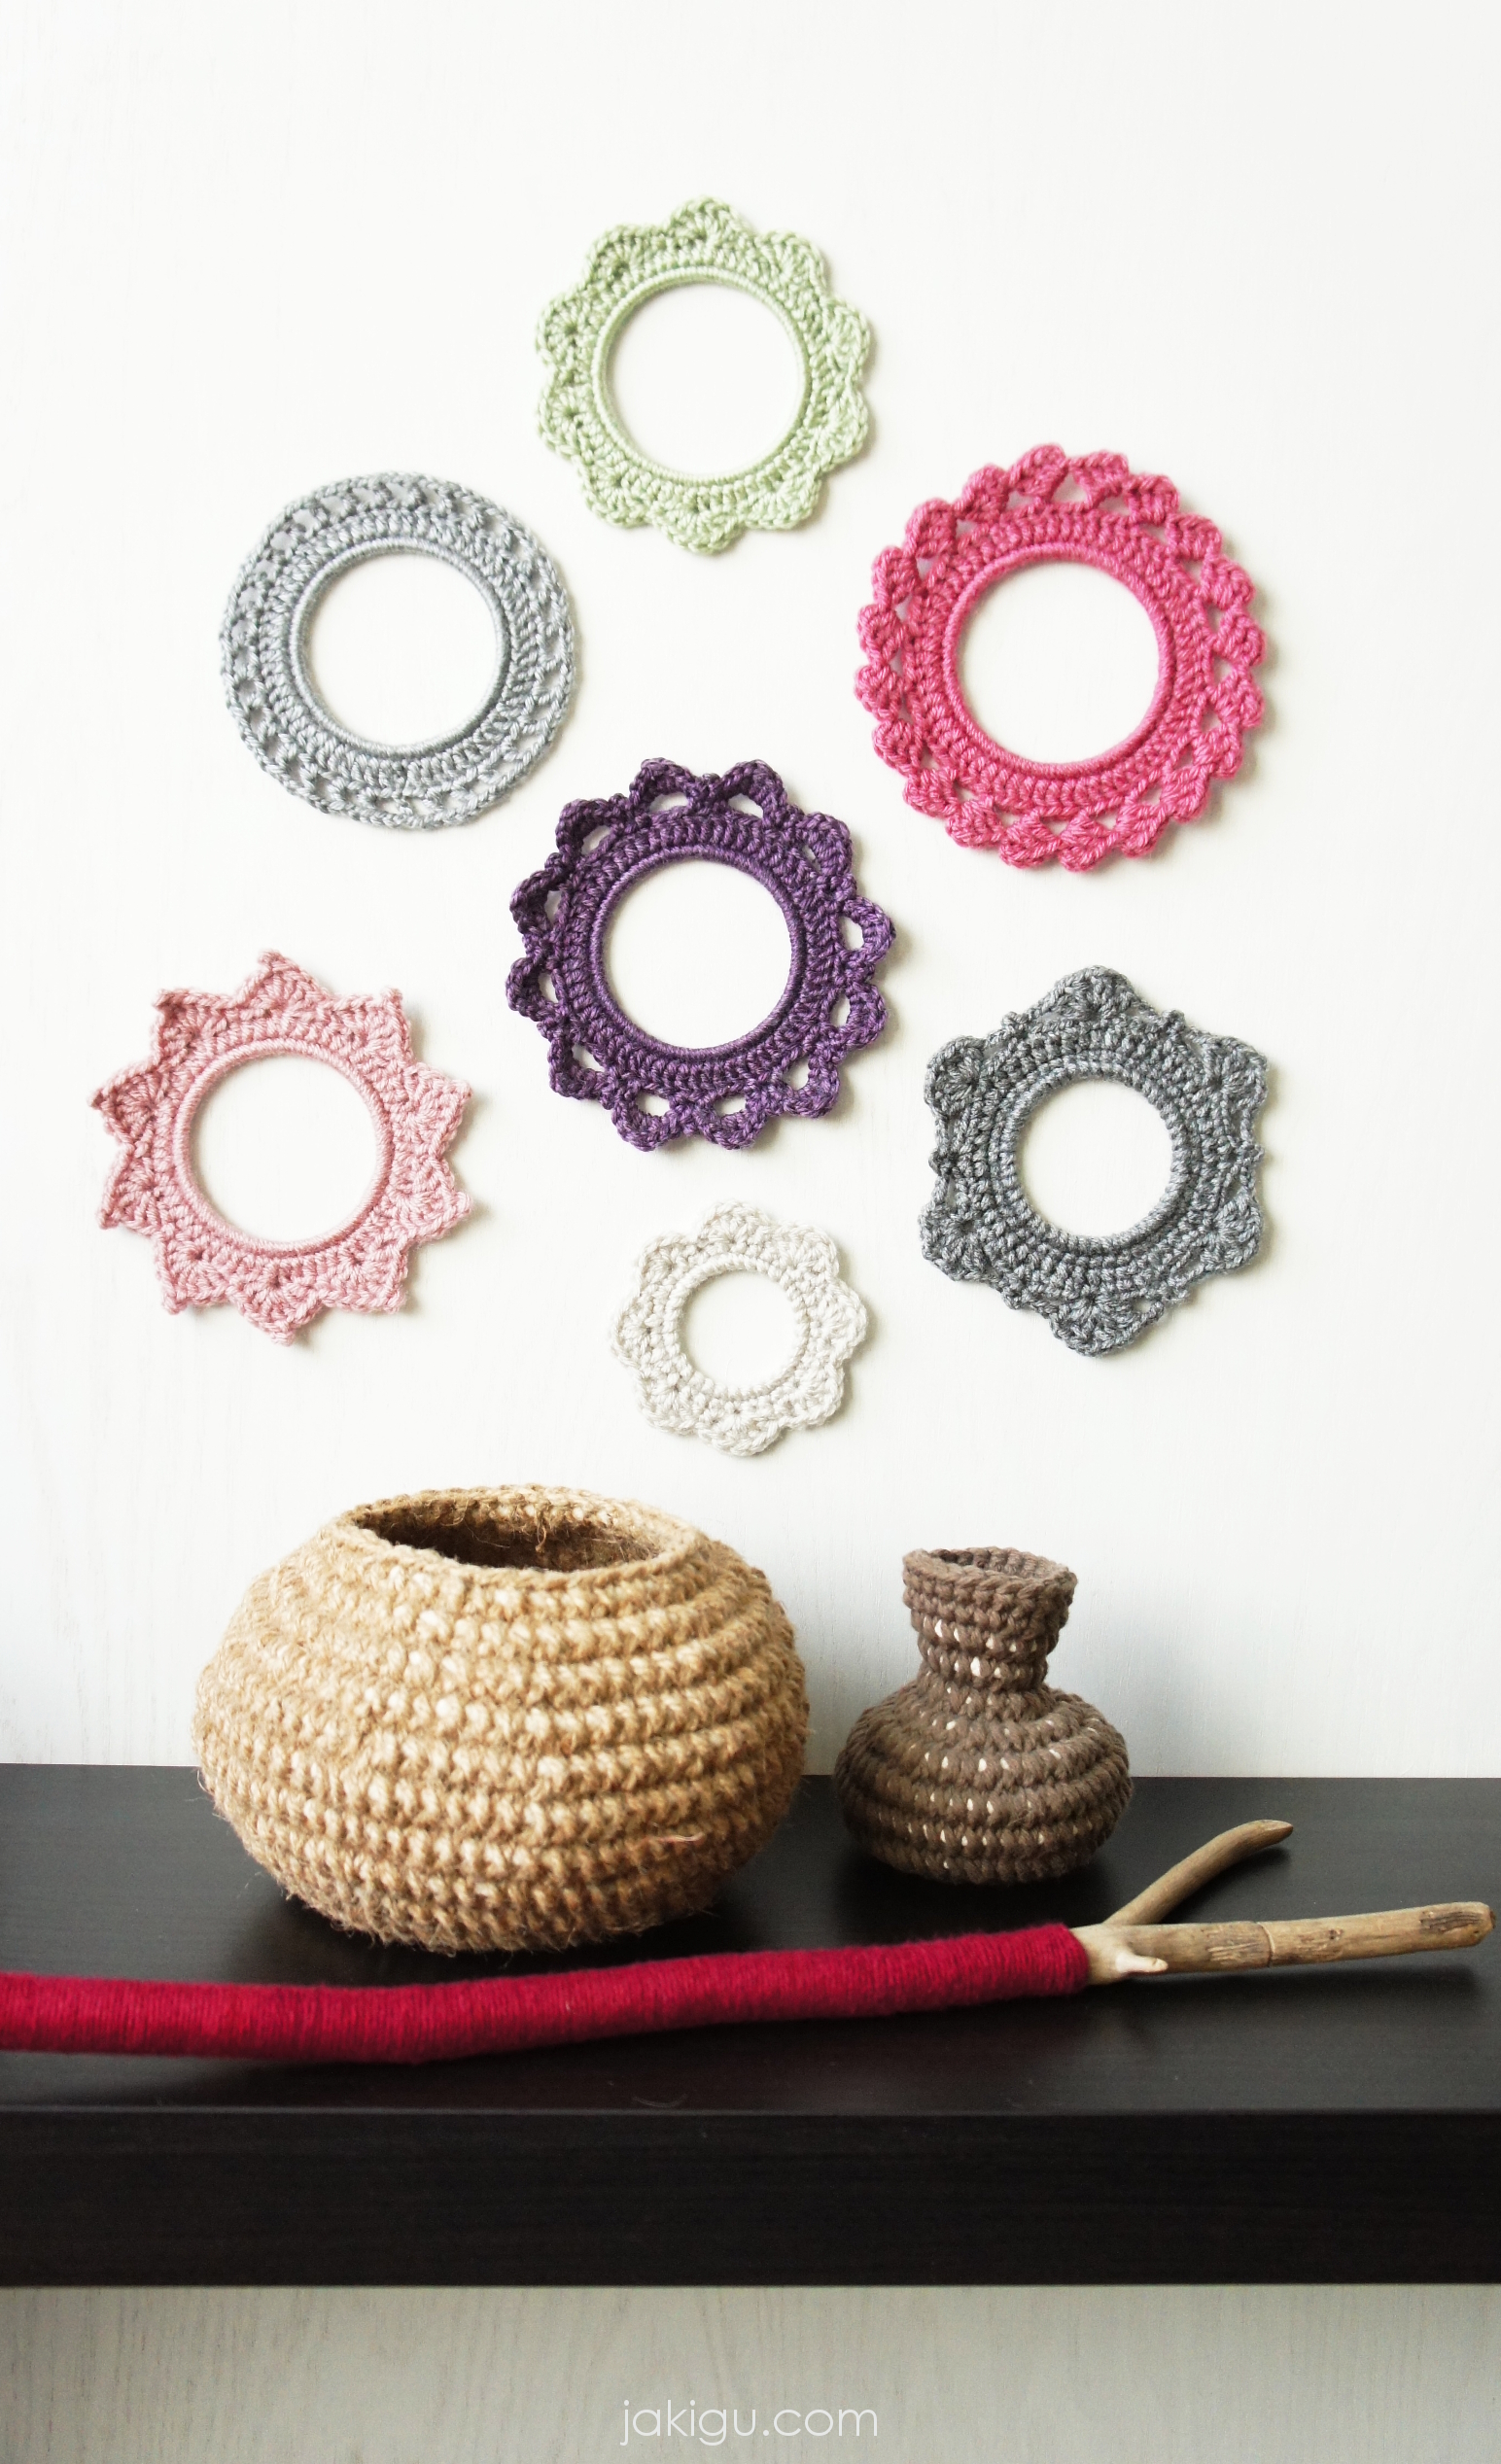 A set of crochet photo frames and chubby crochet vessels | jakigu.com